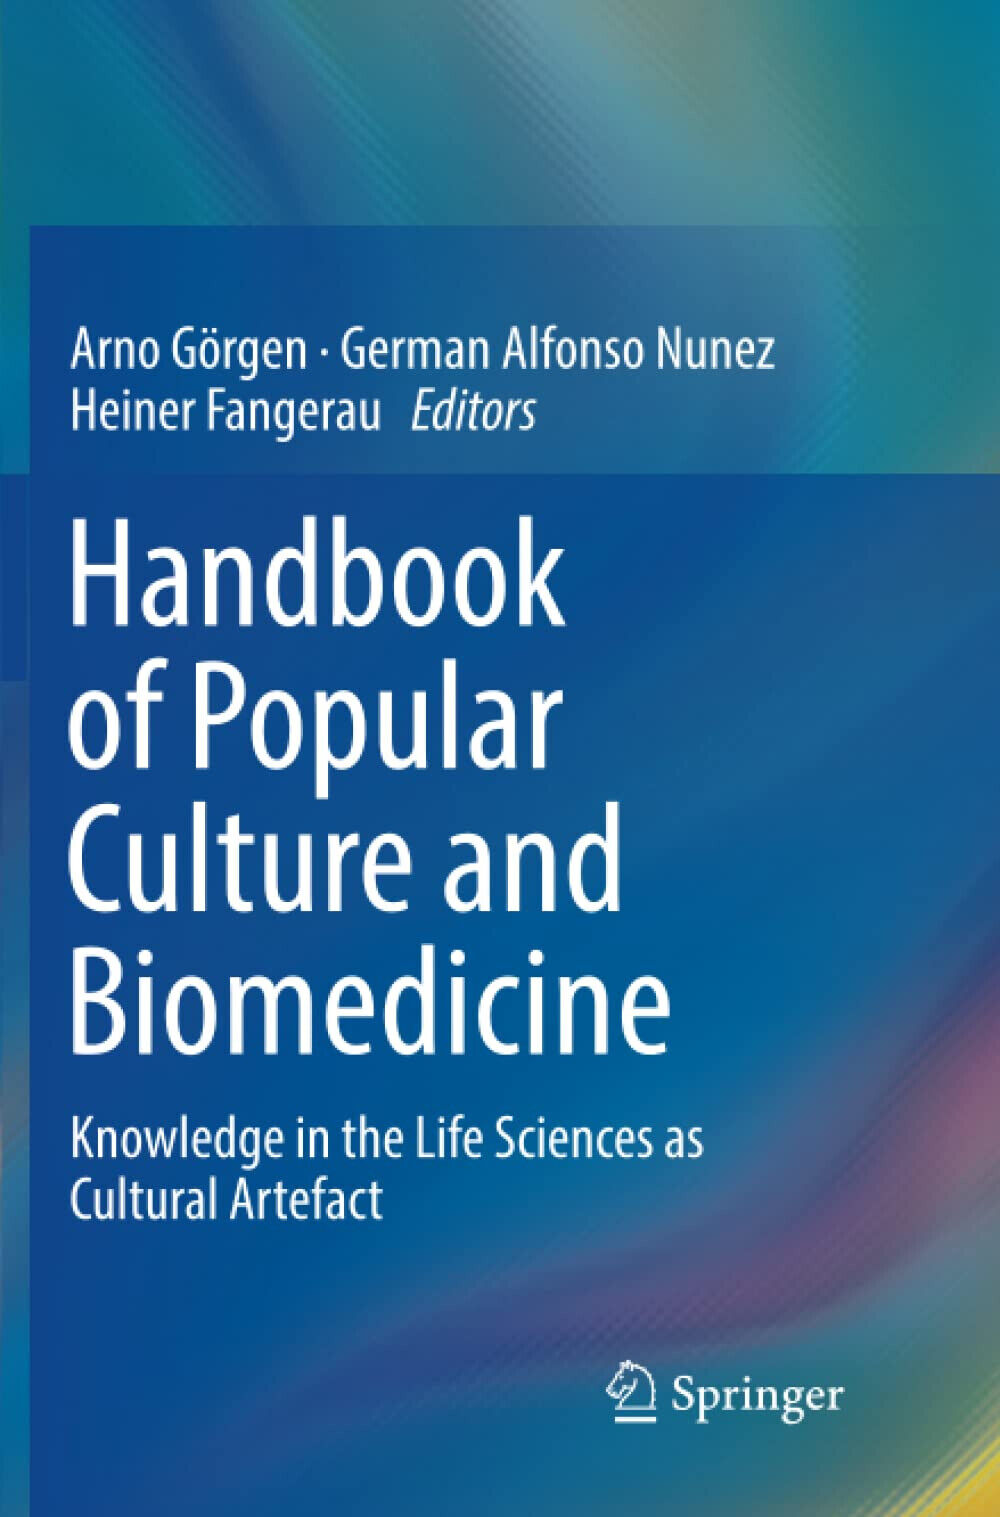 Handbook of Popular Culture and Biomedicine - Arno G?rgen - Springer, 2018